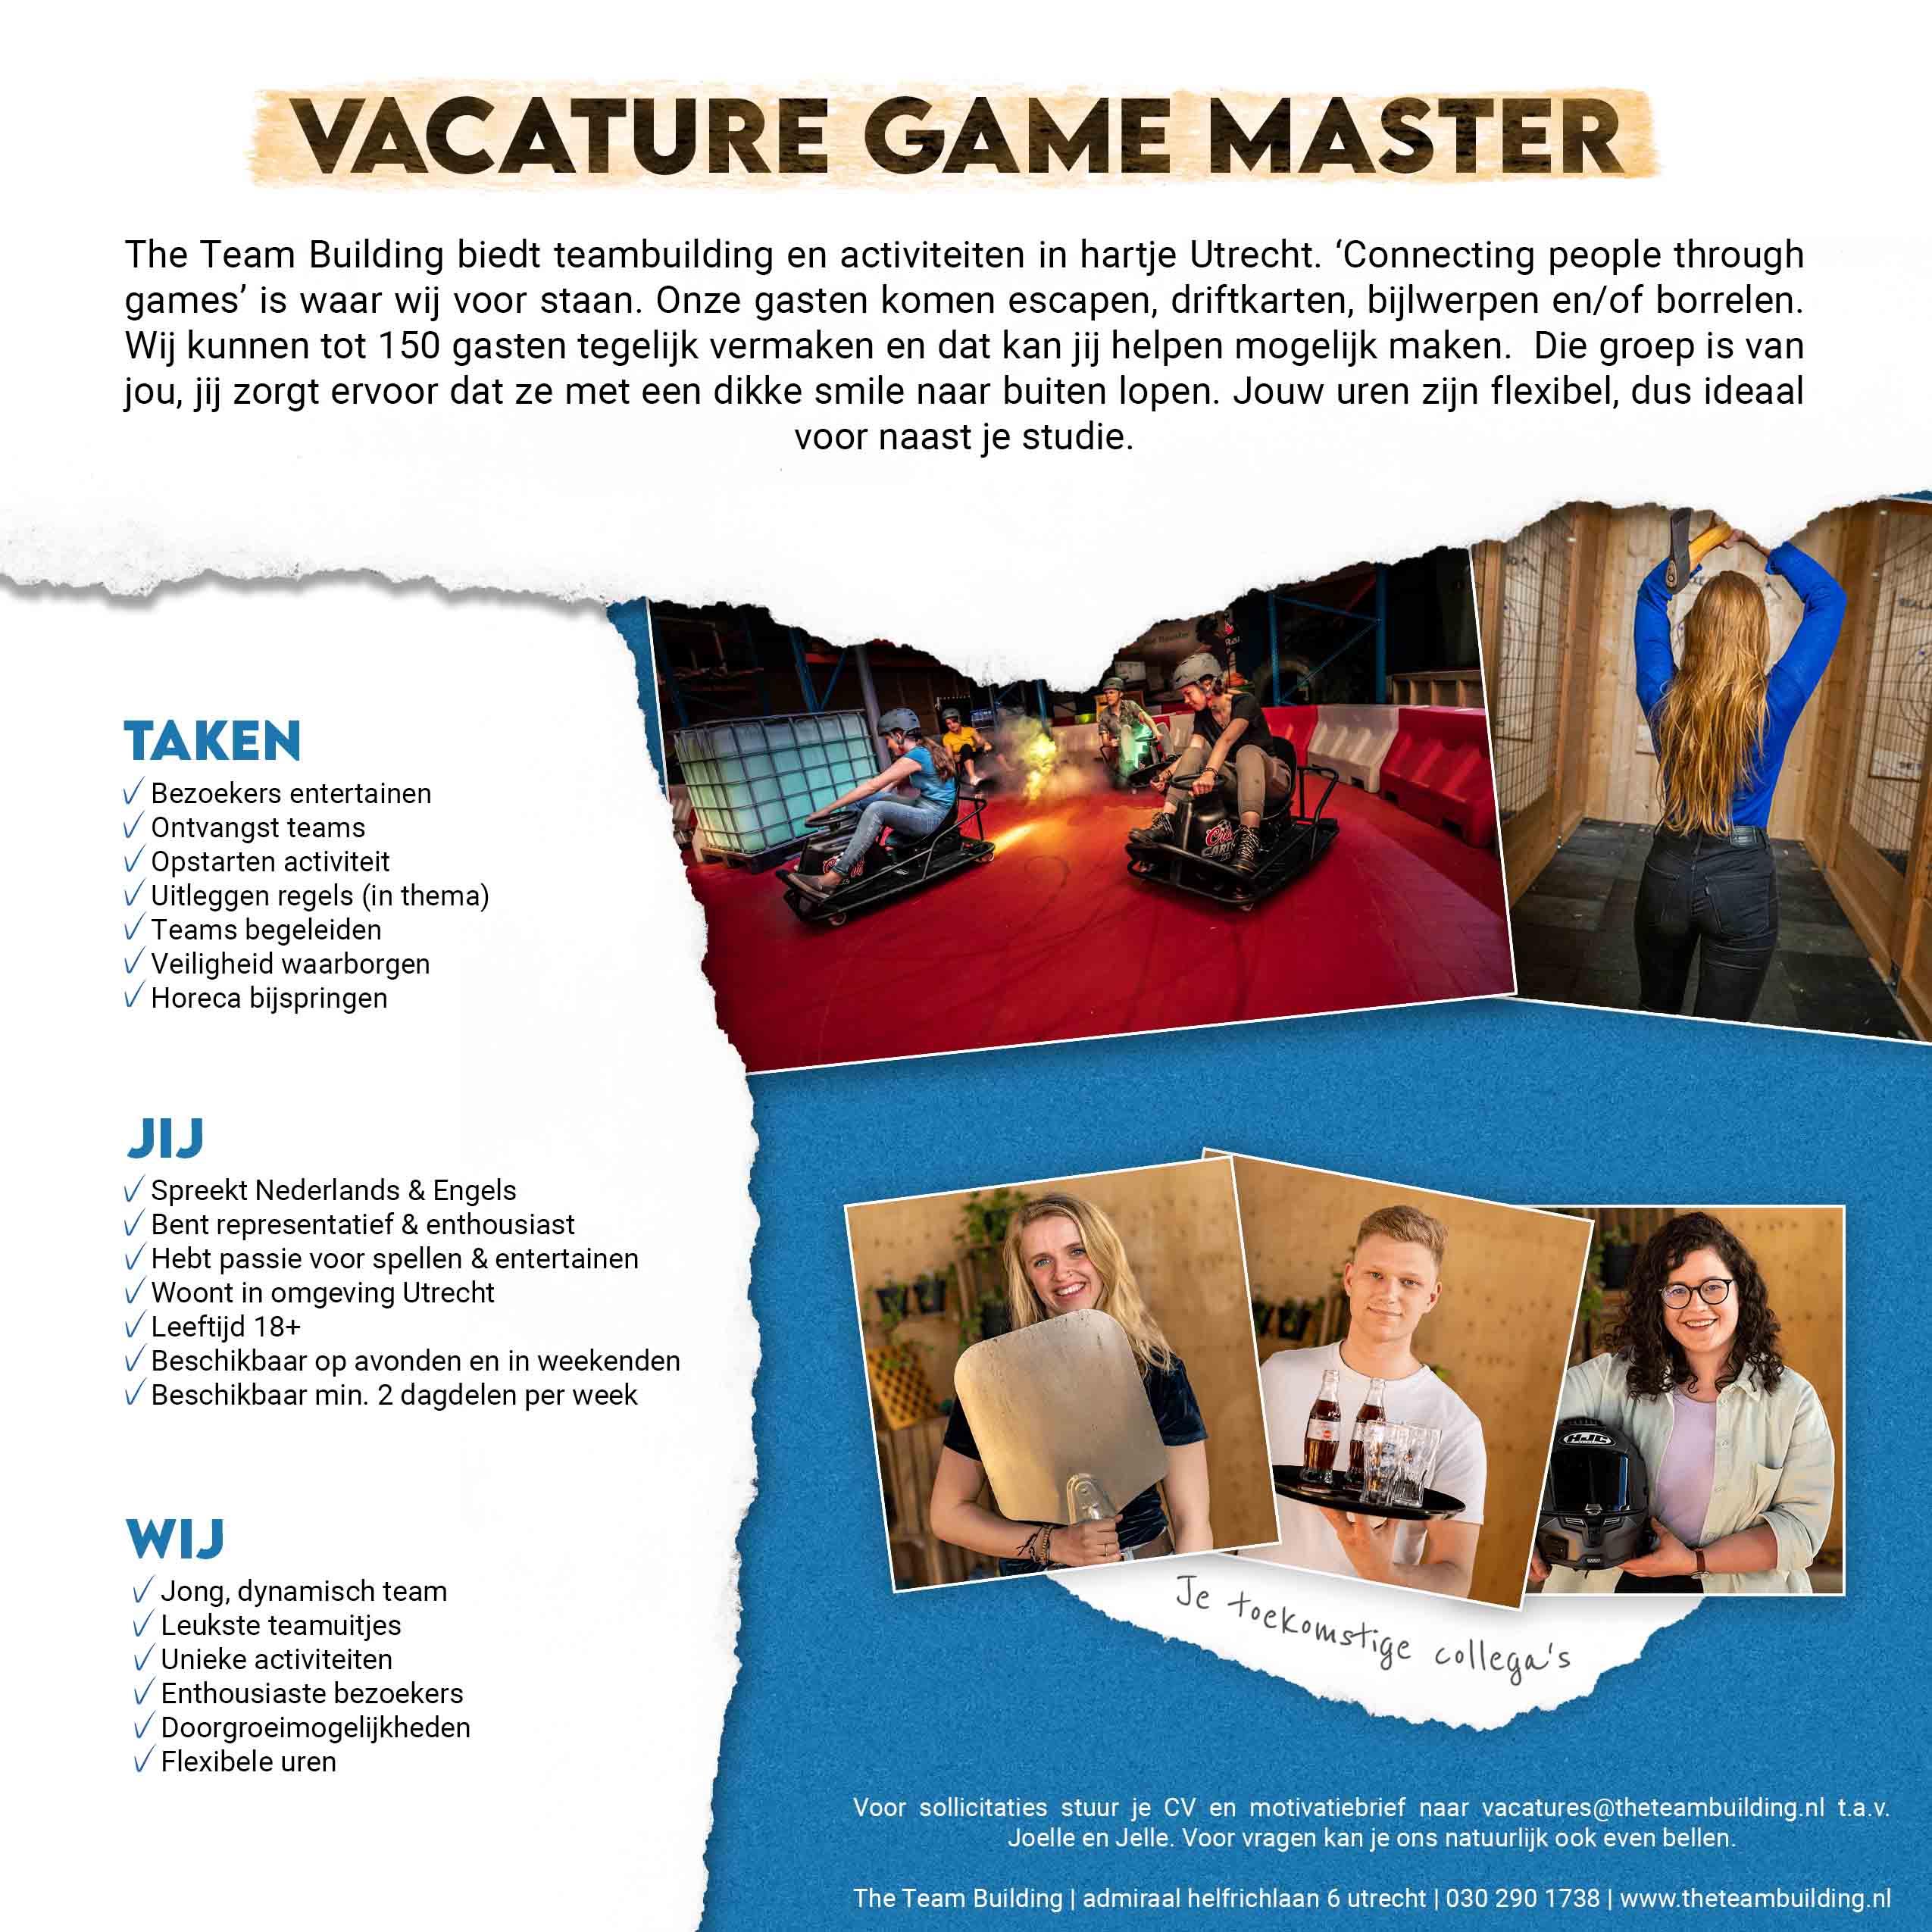 Vacature Game Master The Team Building in Utrecht